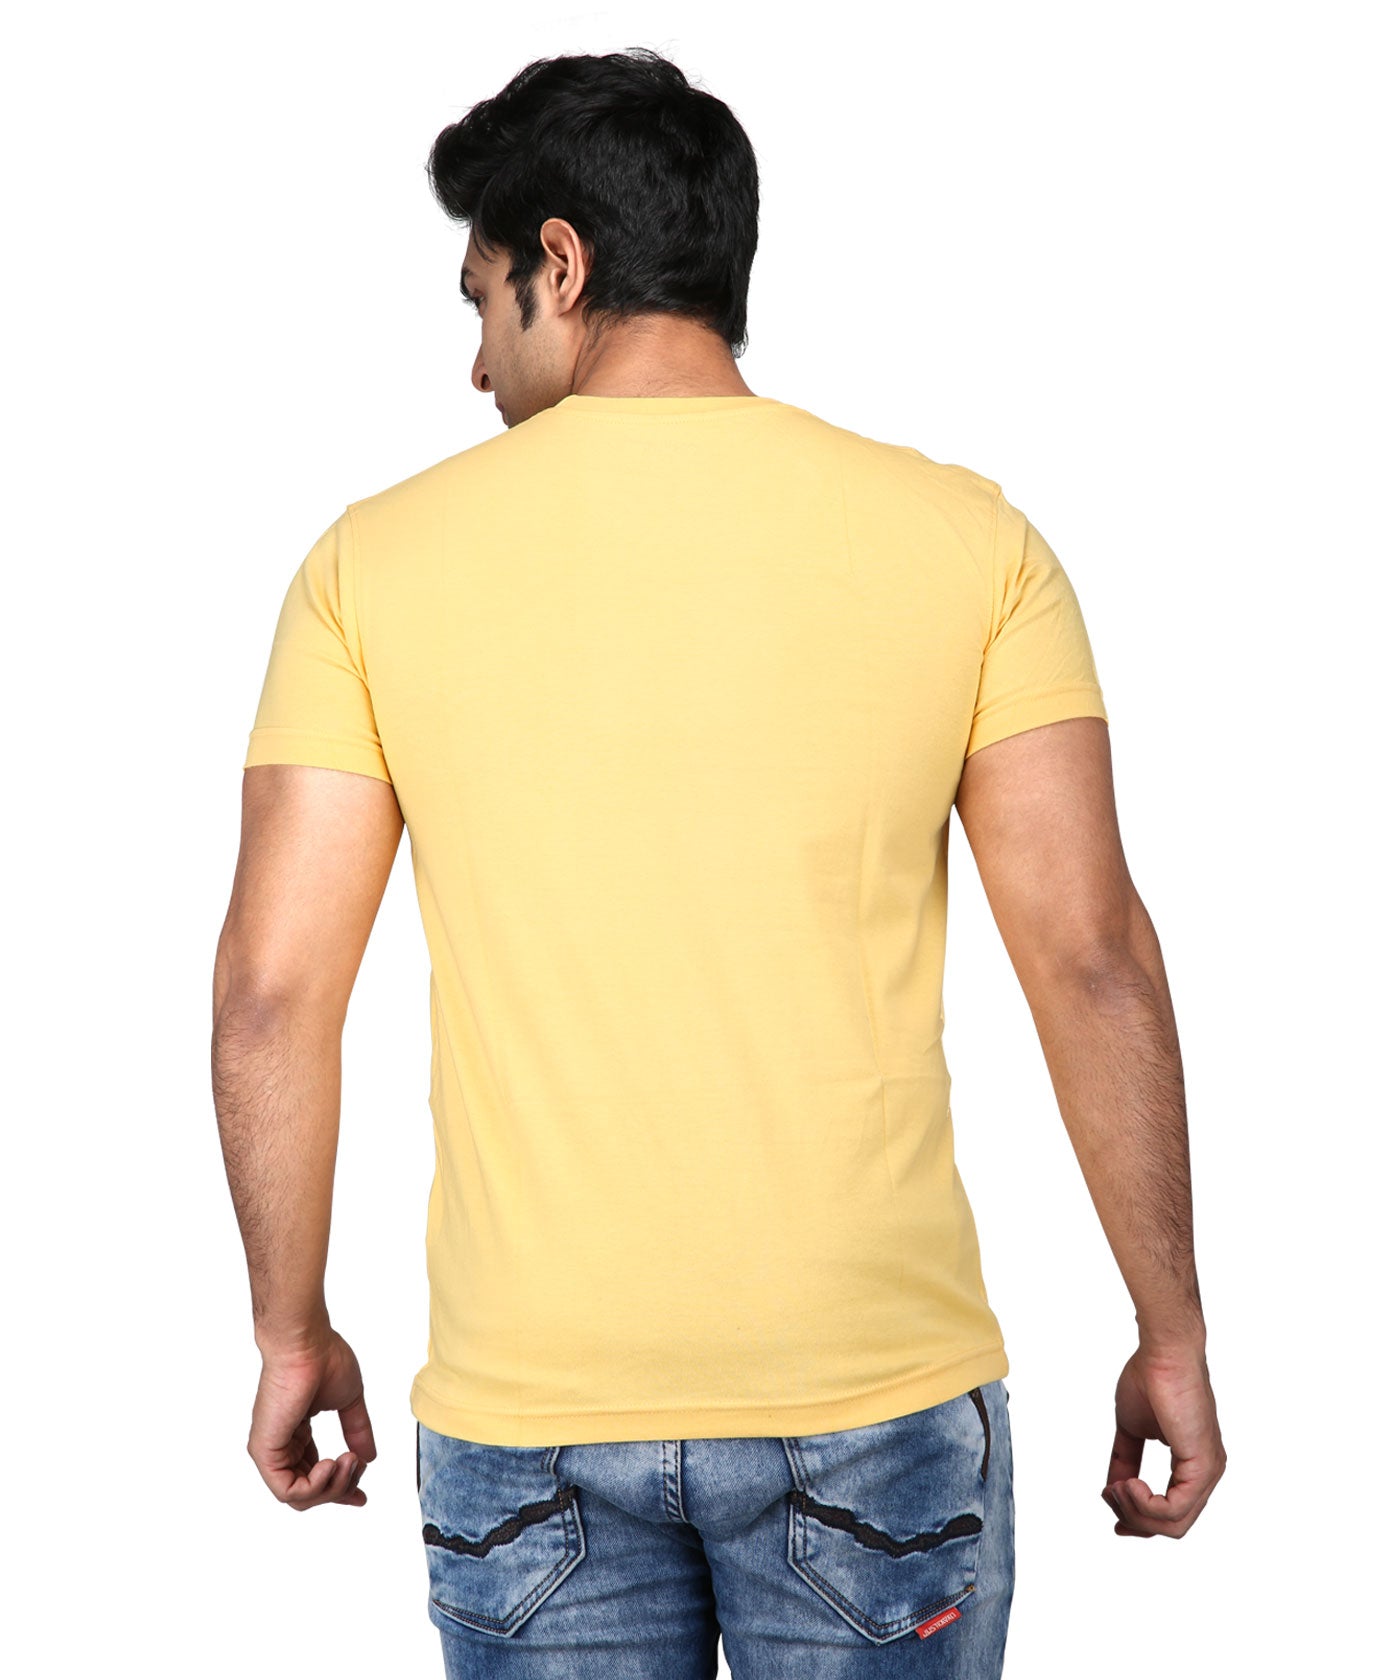 Classic - Premium Round Neck Cotton Tees for Men - Golden Yellow